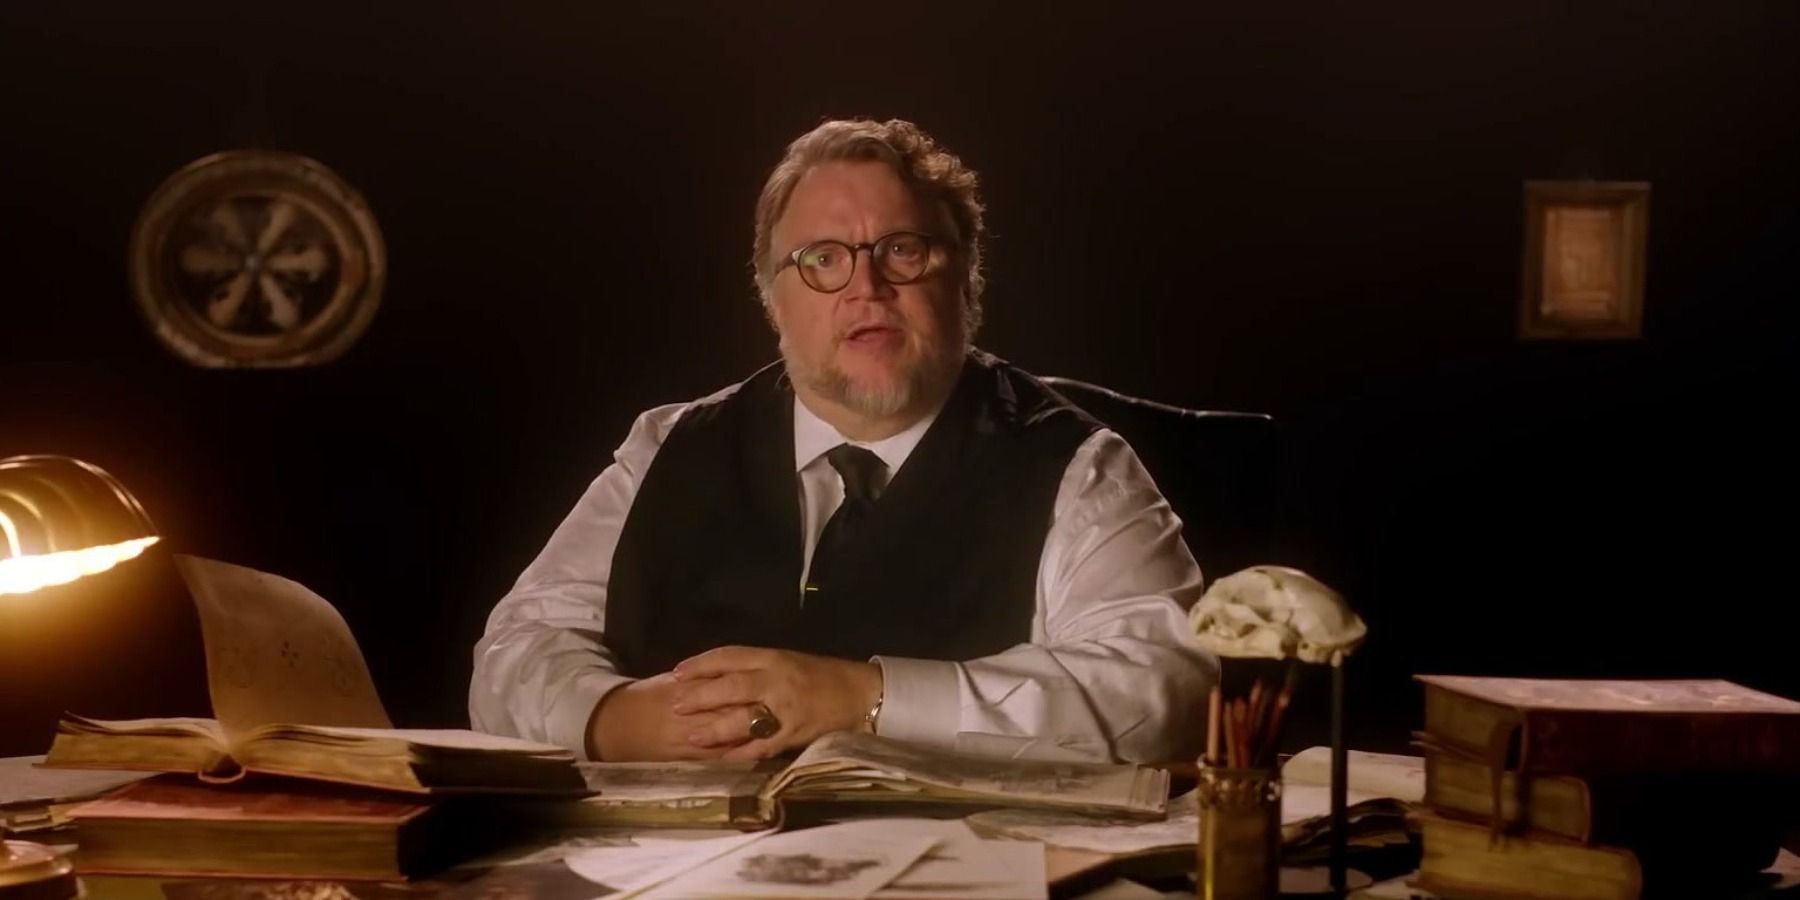 Del Toro on desk